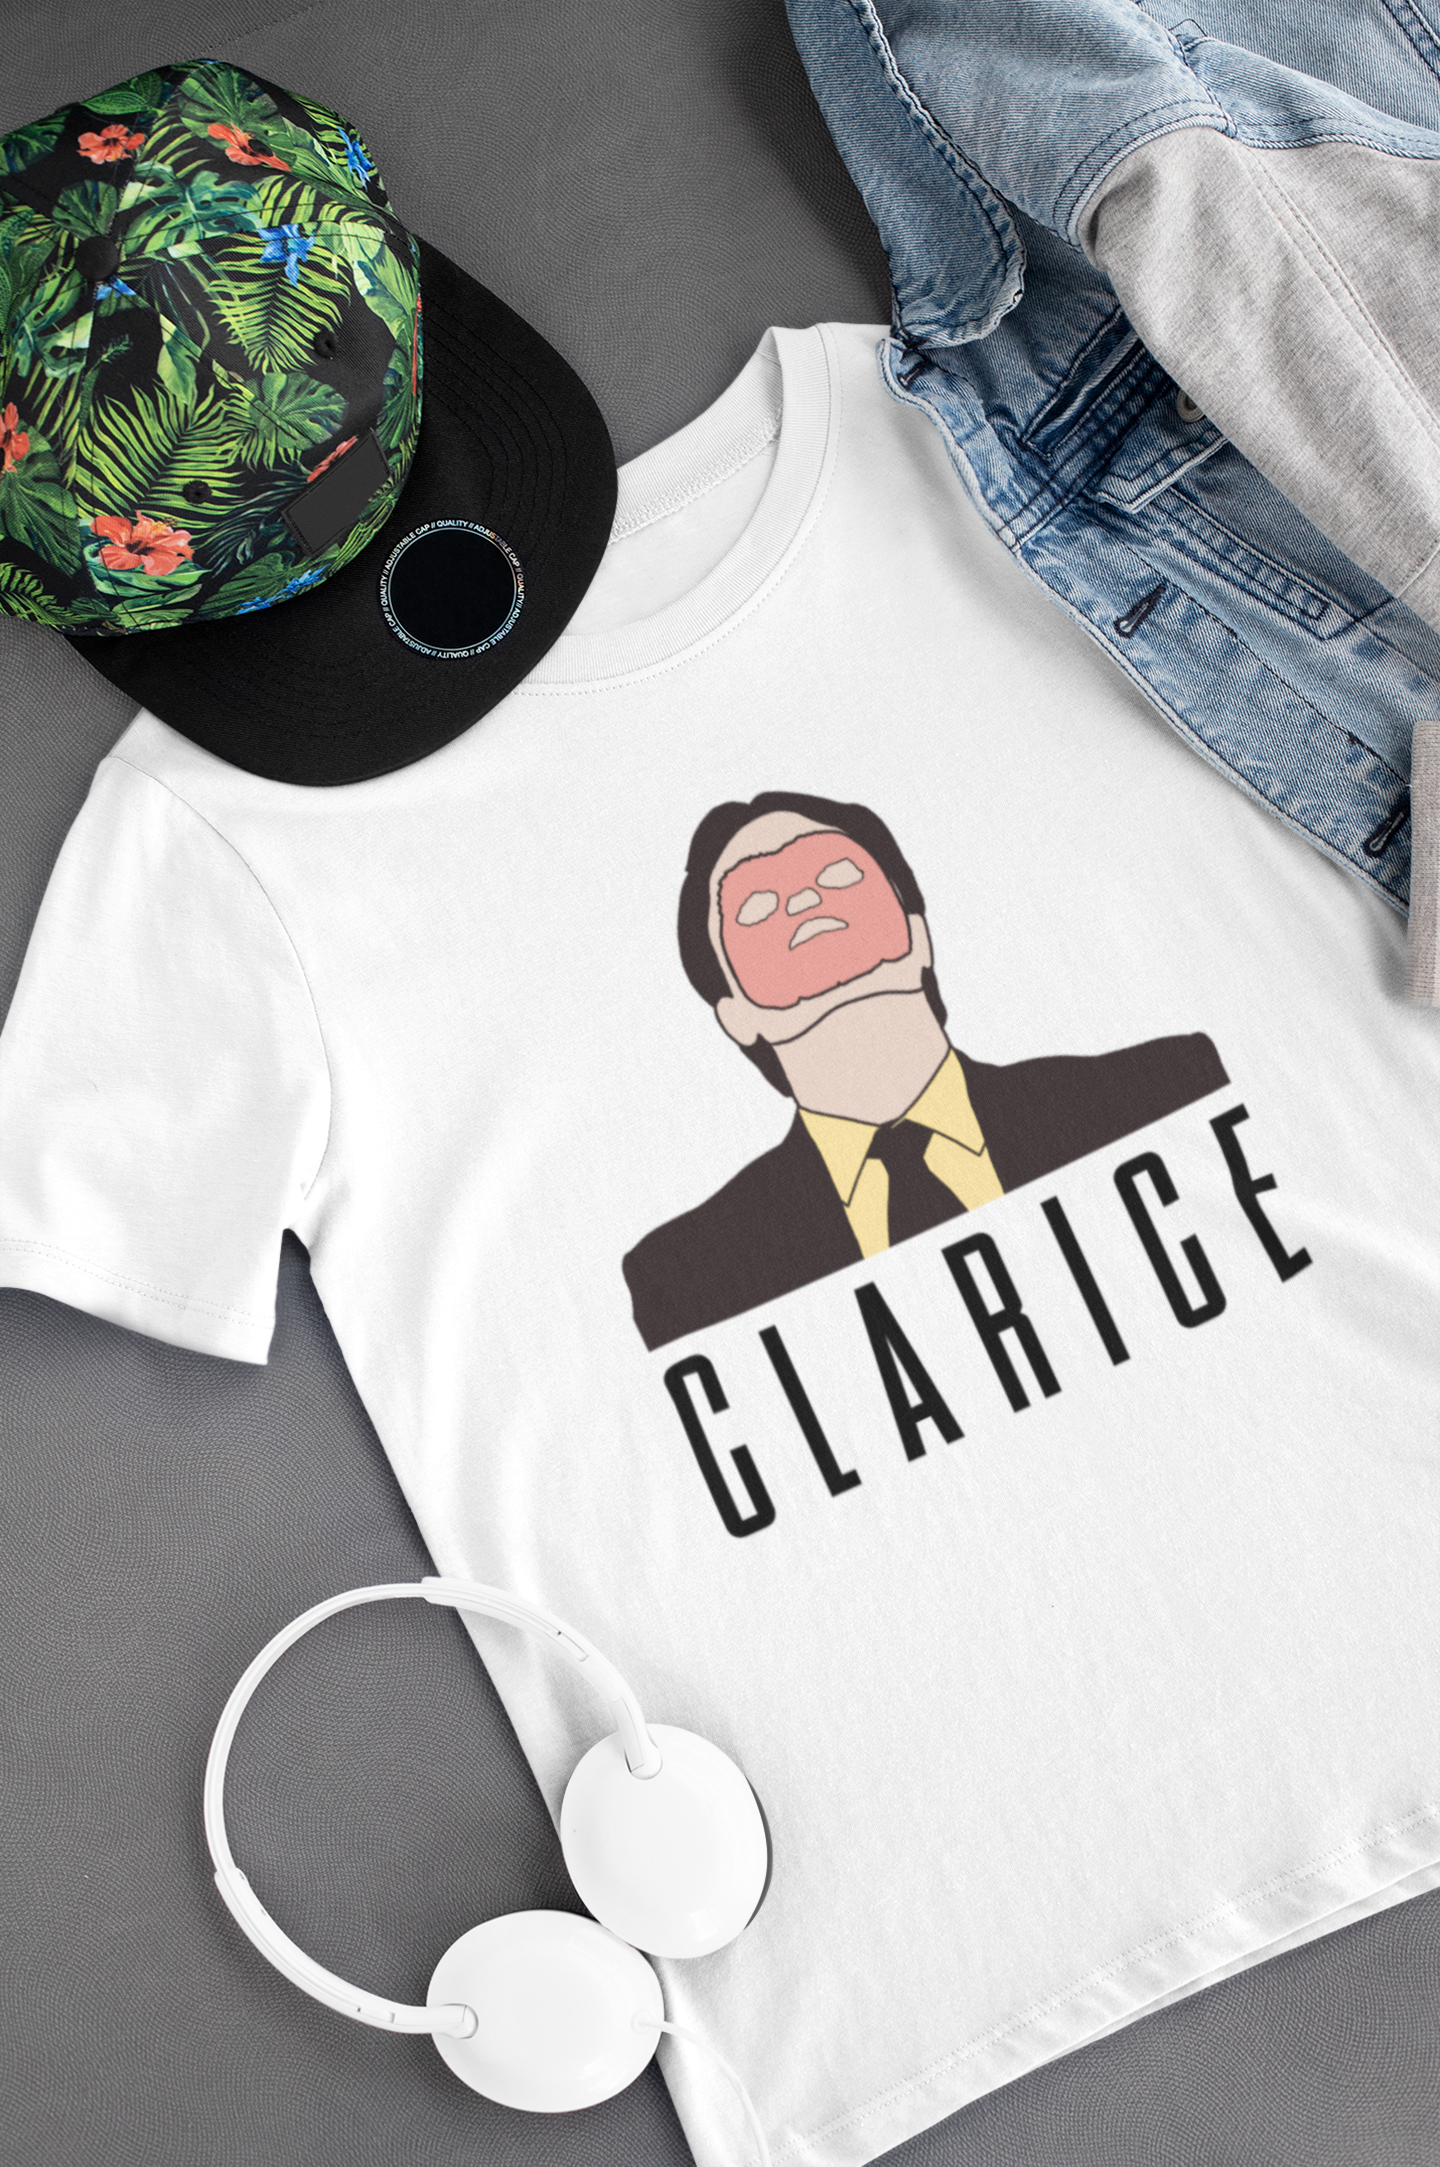 Camiseta Dwight "Clarice" - The Office - Séries de TV